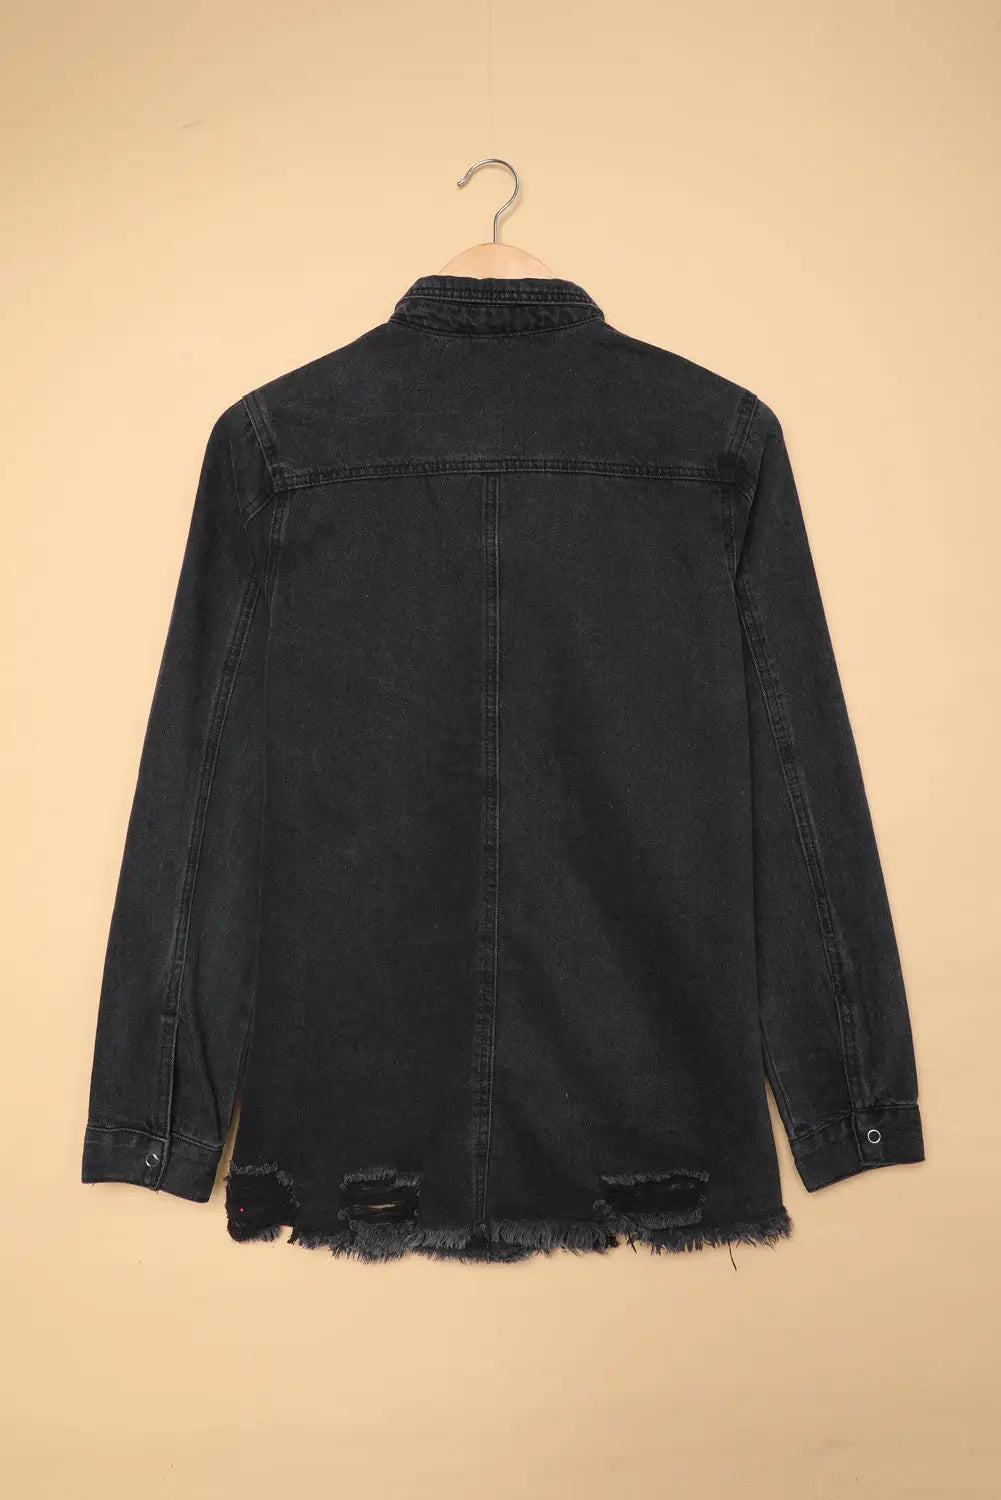 Black ripped denim jacket - outerwear